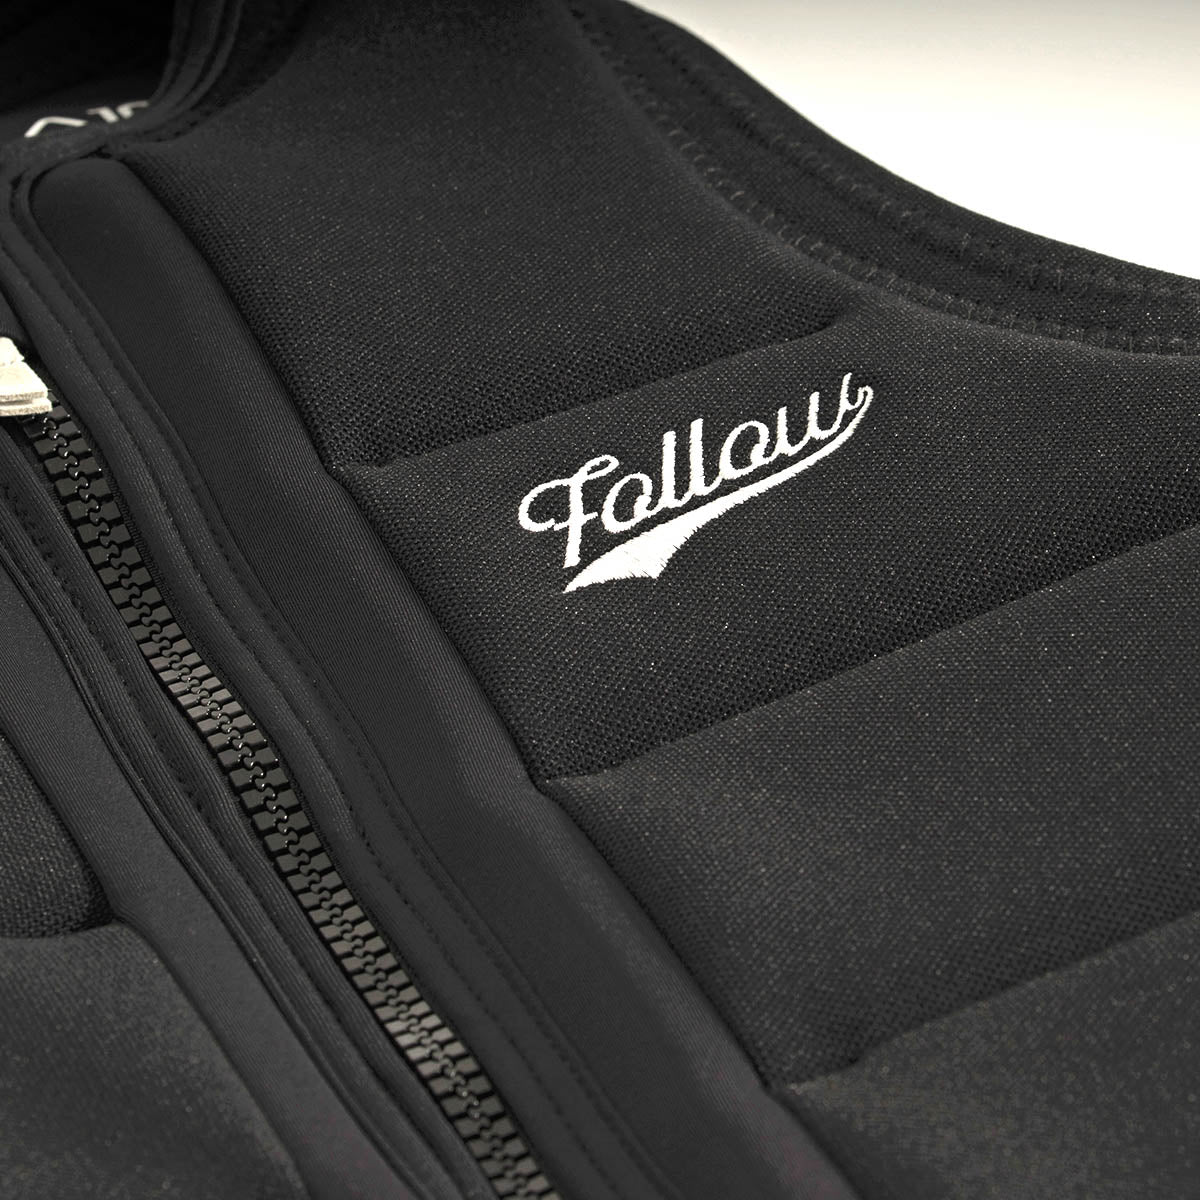 Follow Stow Ladies Comp Wake Vest in Black - BoardCo